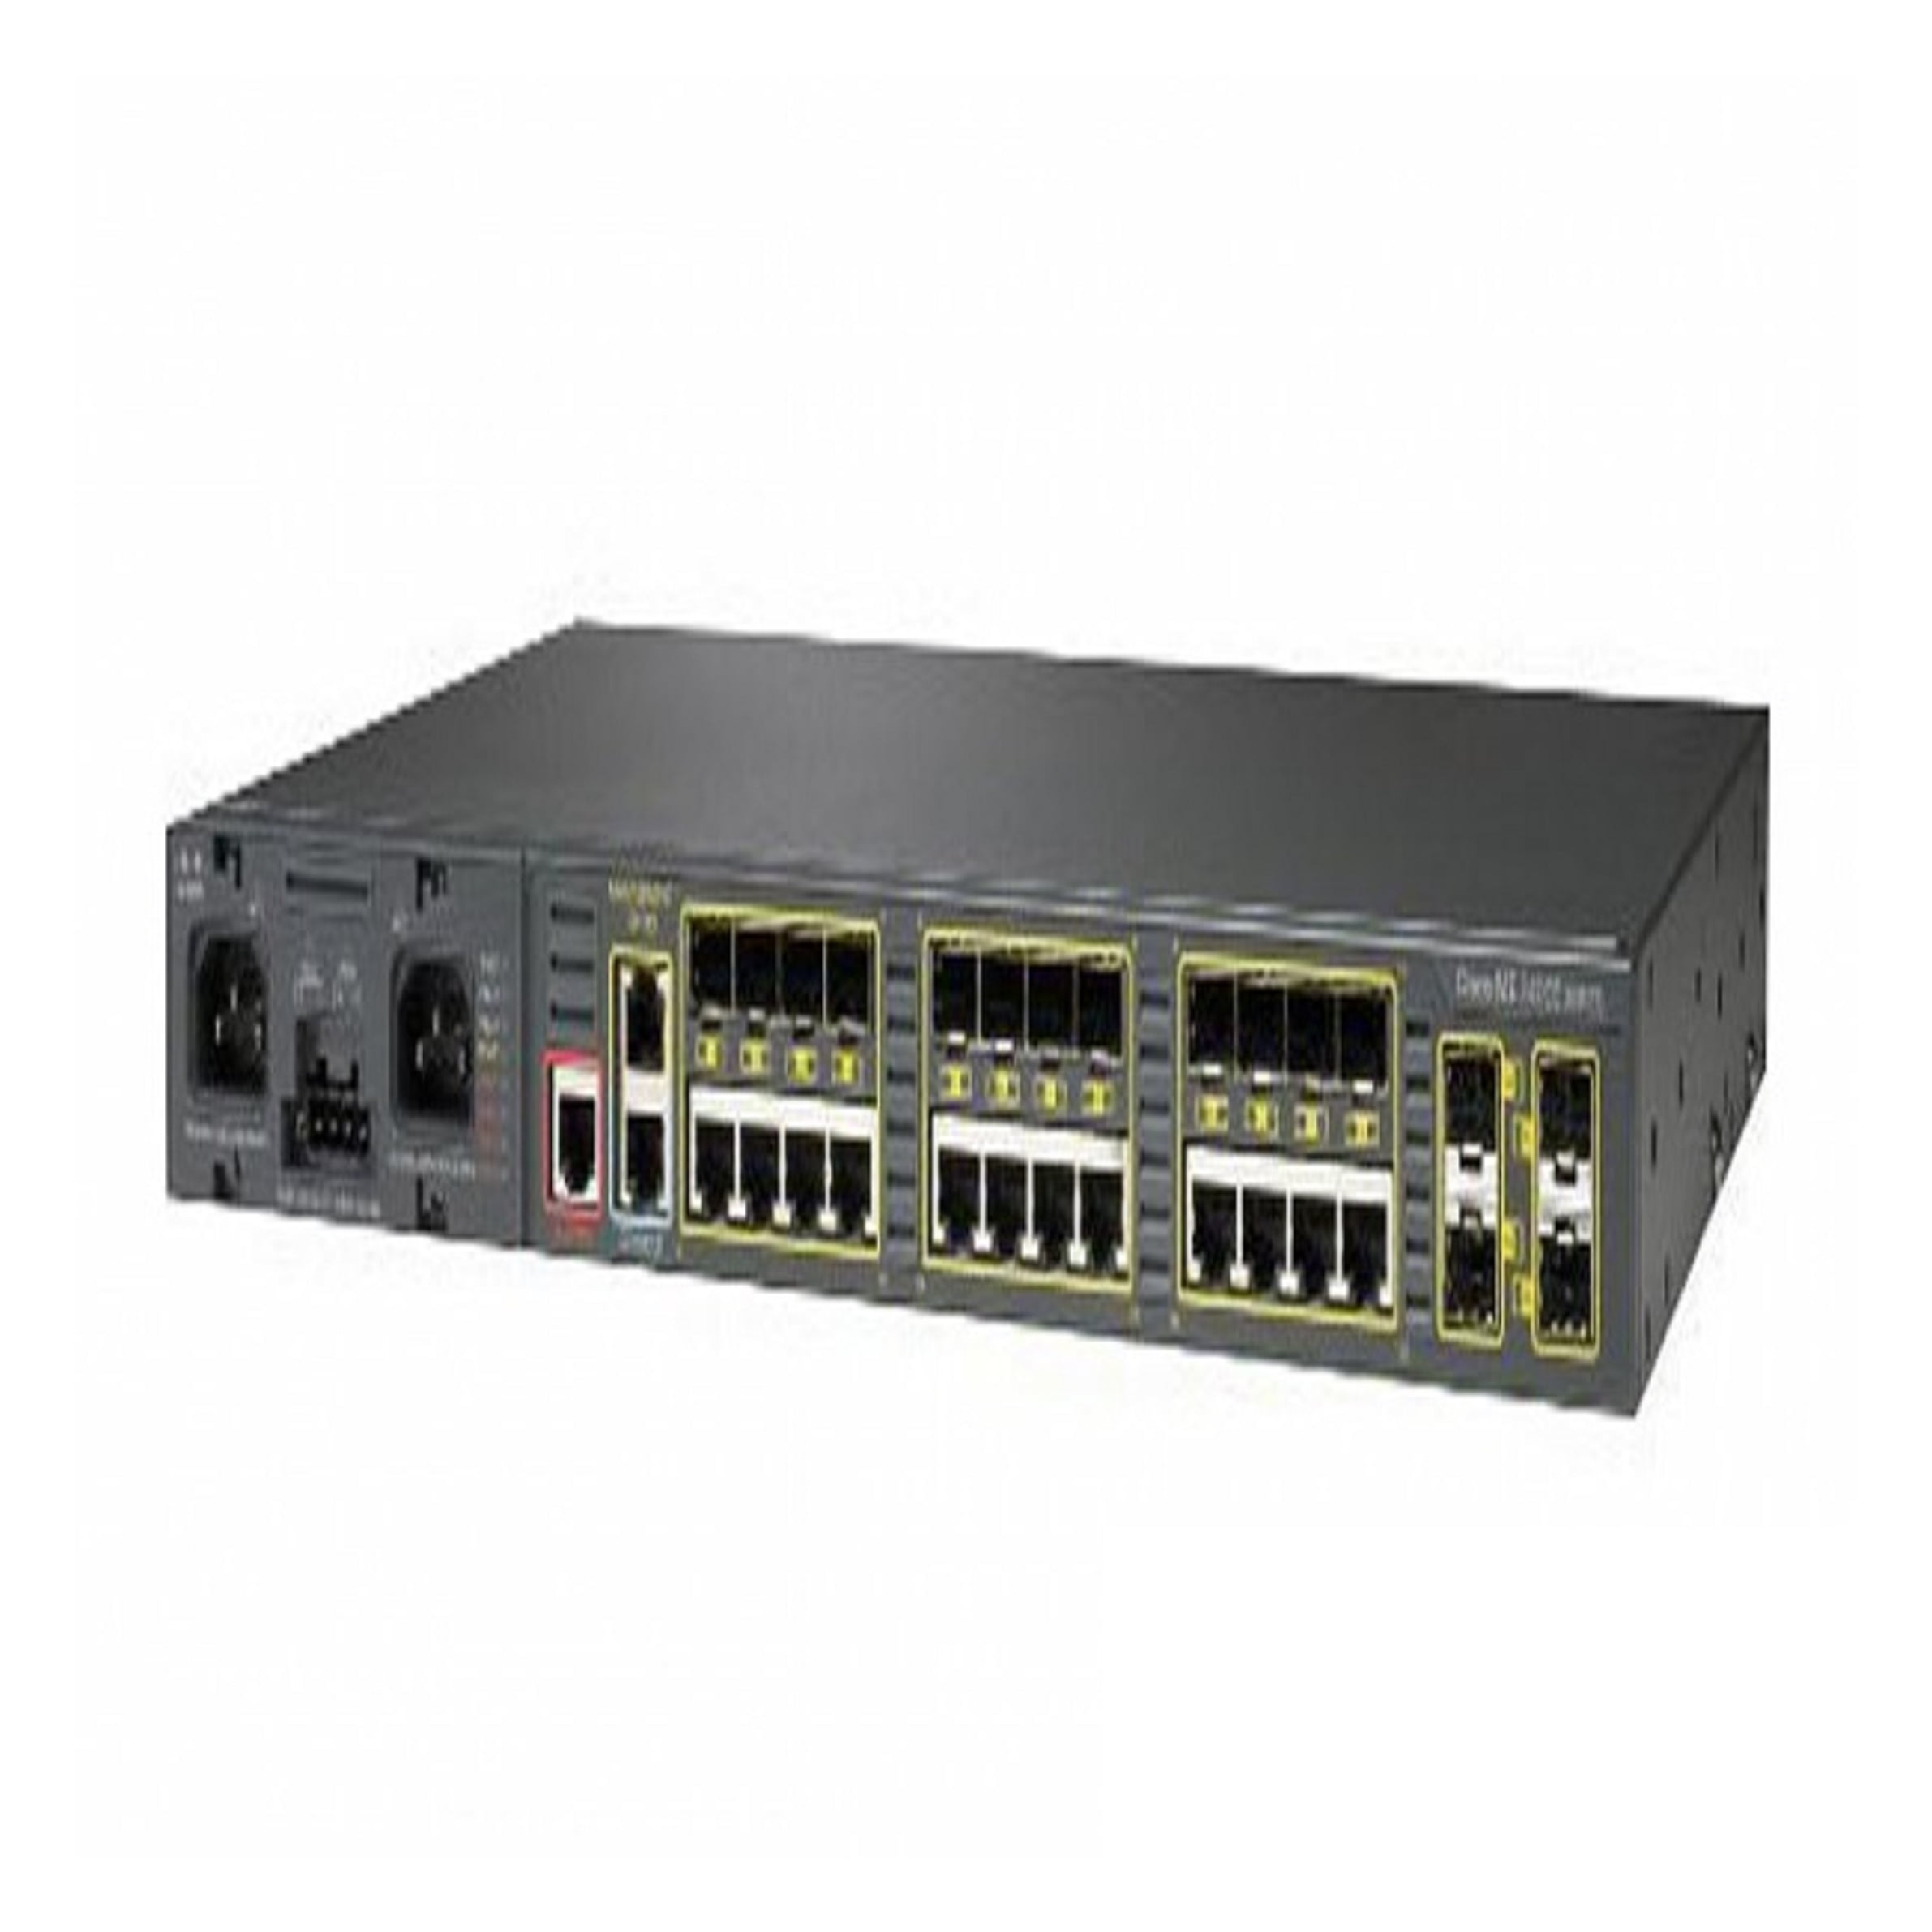 Cisco ME-3400G-12CS-A 12 Port ME3400 Gigabit Switch - SAME DAY SHIPPING